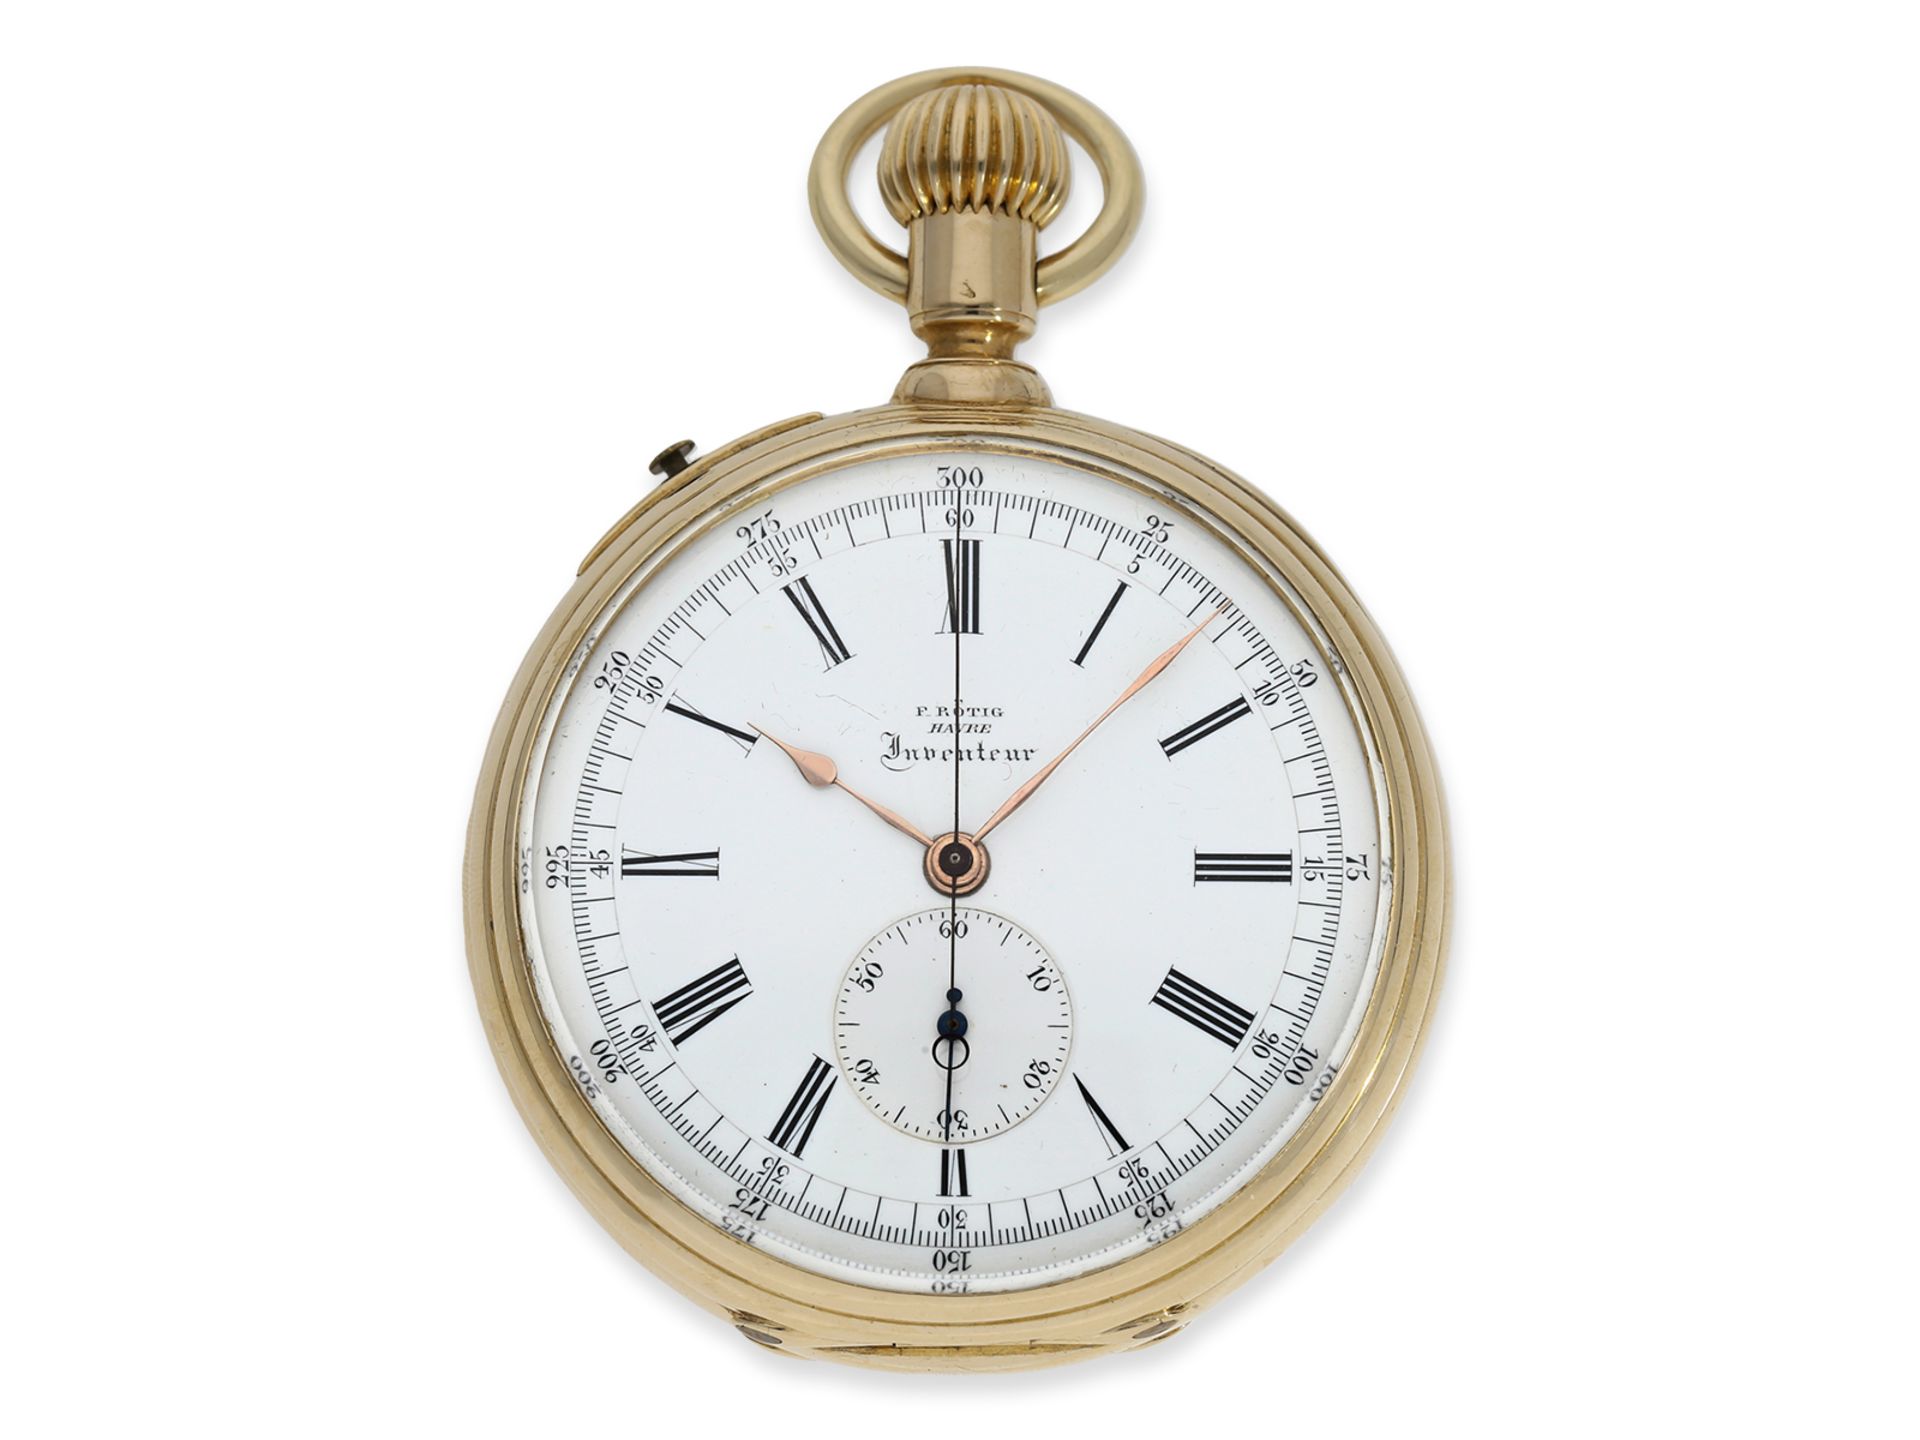 Taschenuhr: extrem seltener, experimenteller Chronograph, Chronometermacher F. Rötig Havre "Inventeu